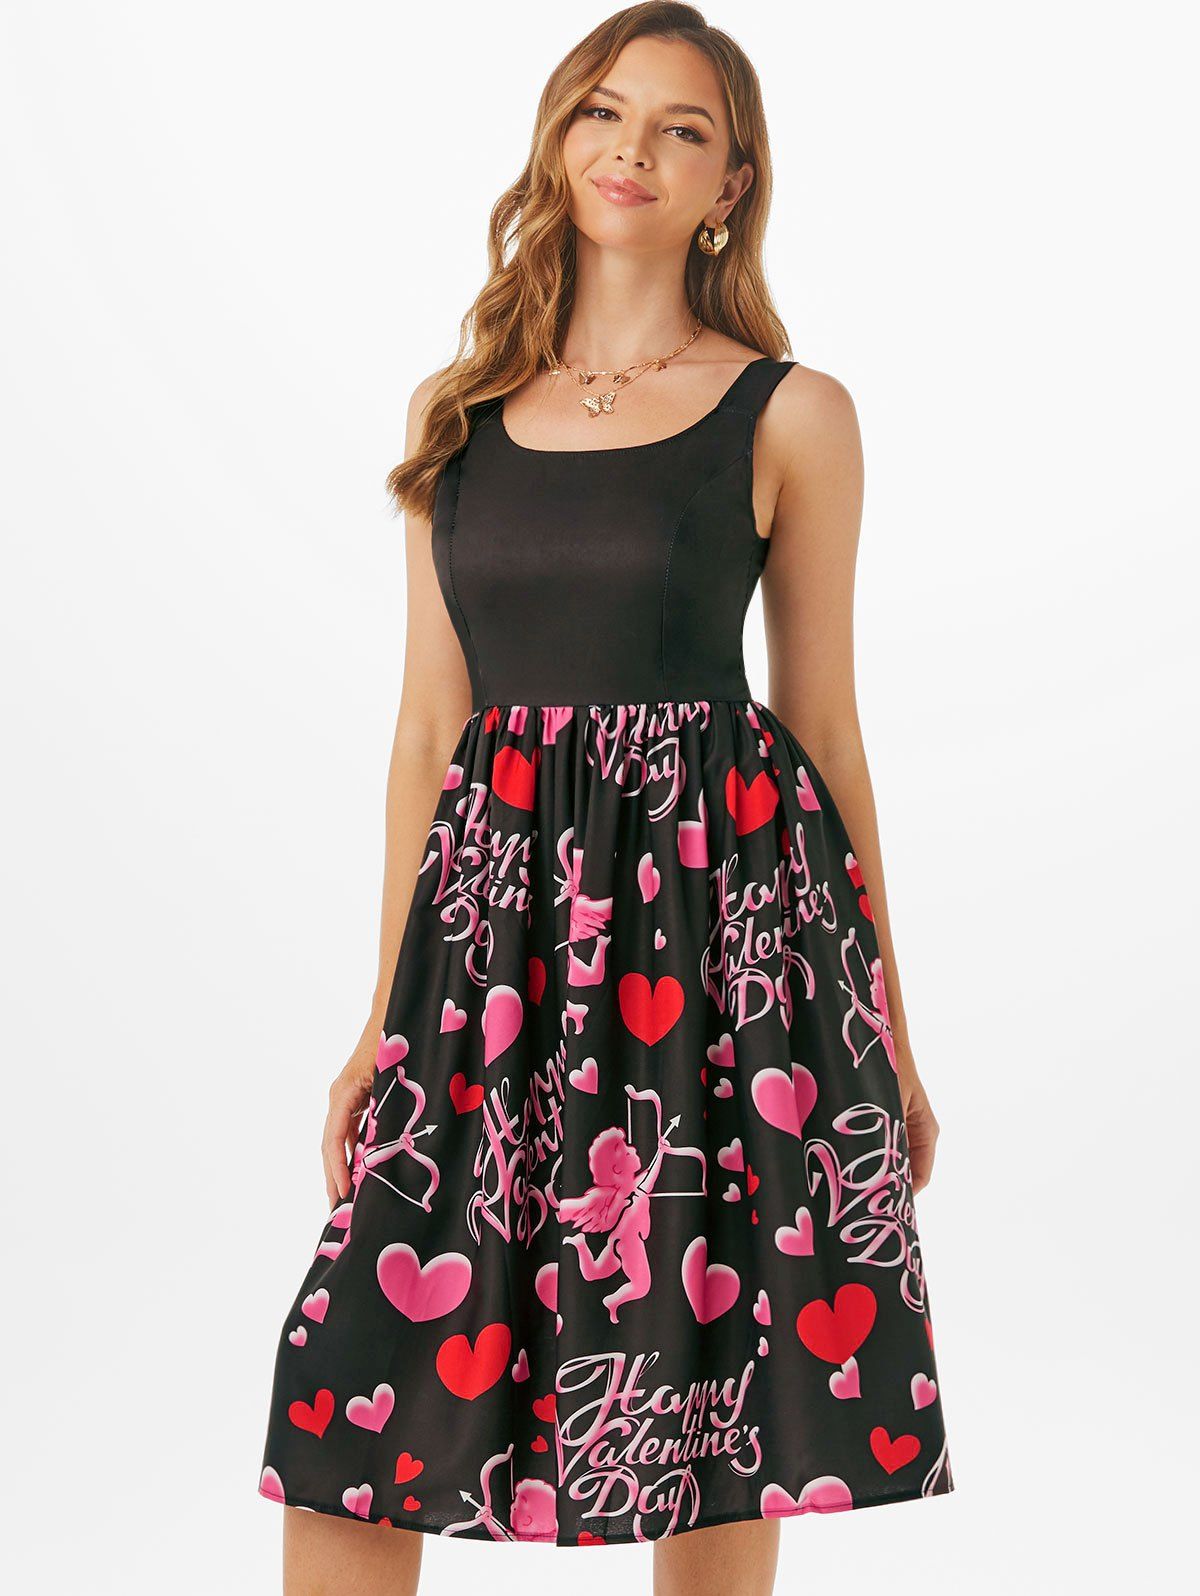 Heart Cupid Print Sleeveless Dress - multicolor S